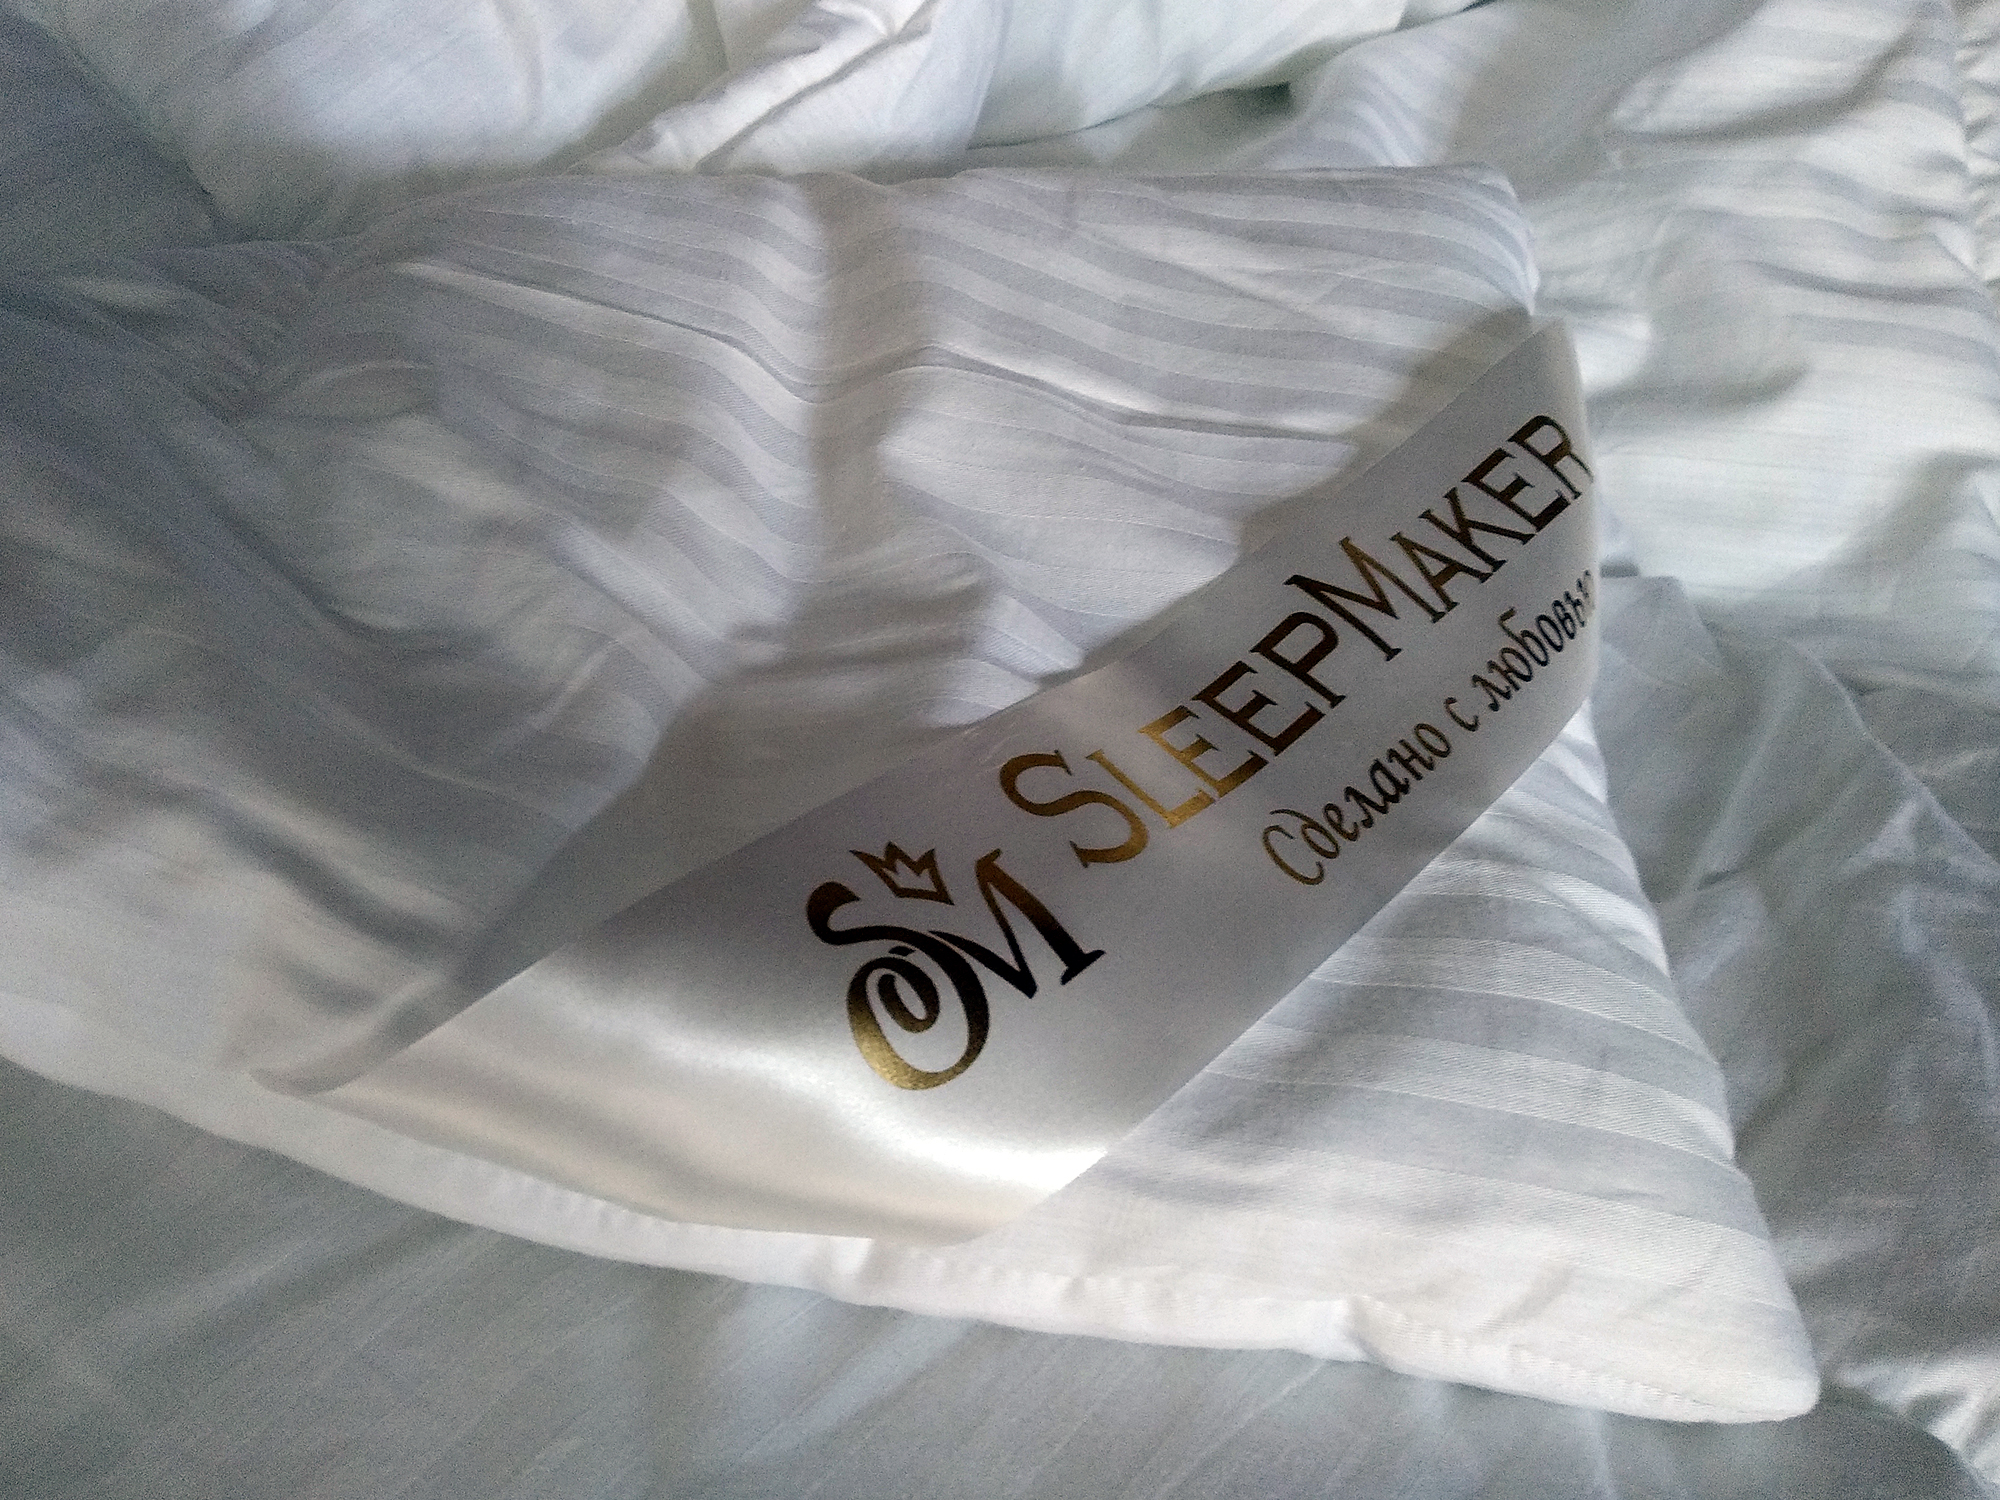 картинка Класcическая подушка Hotel Luxe от магазина SleepMaker